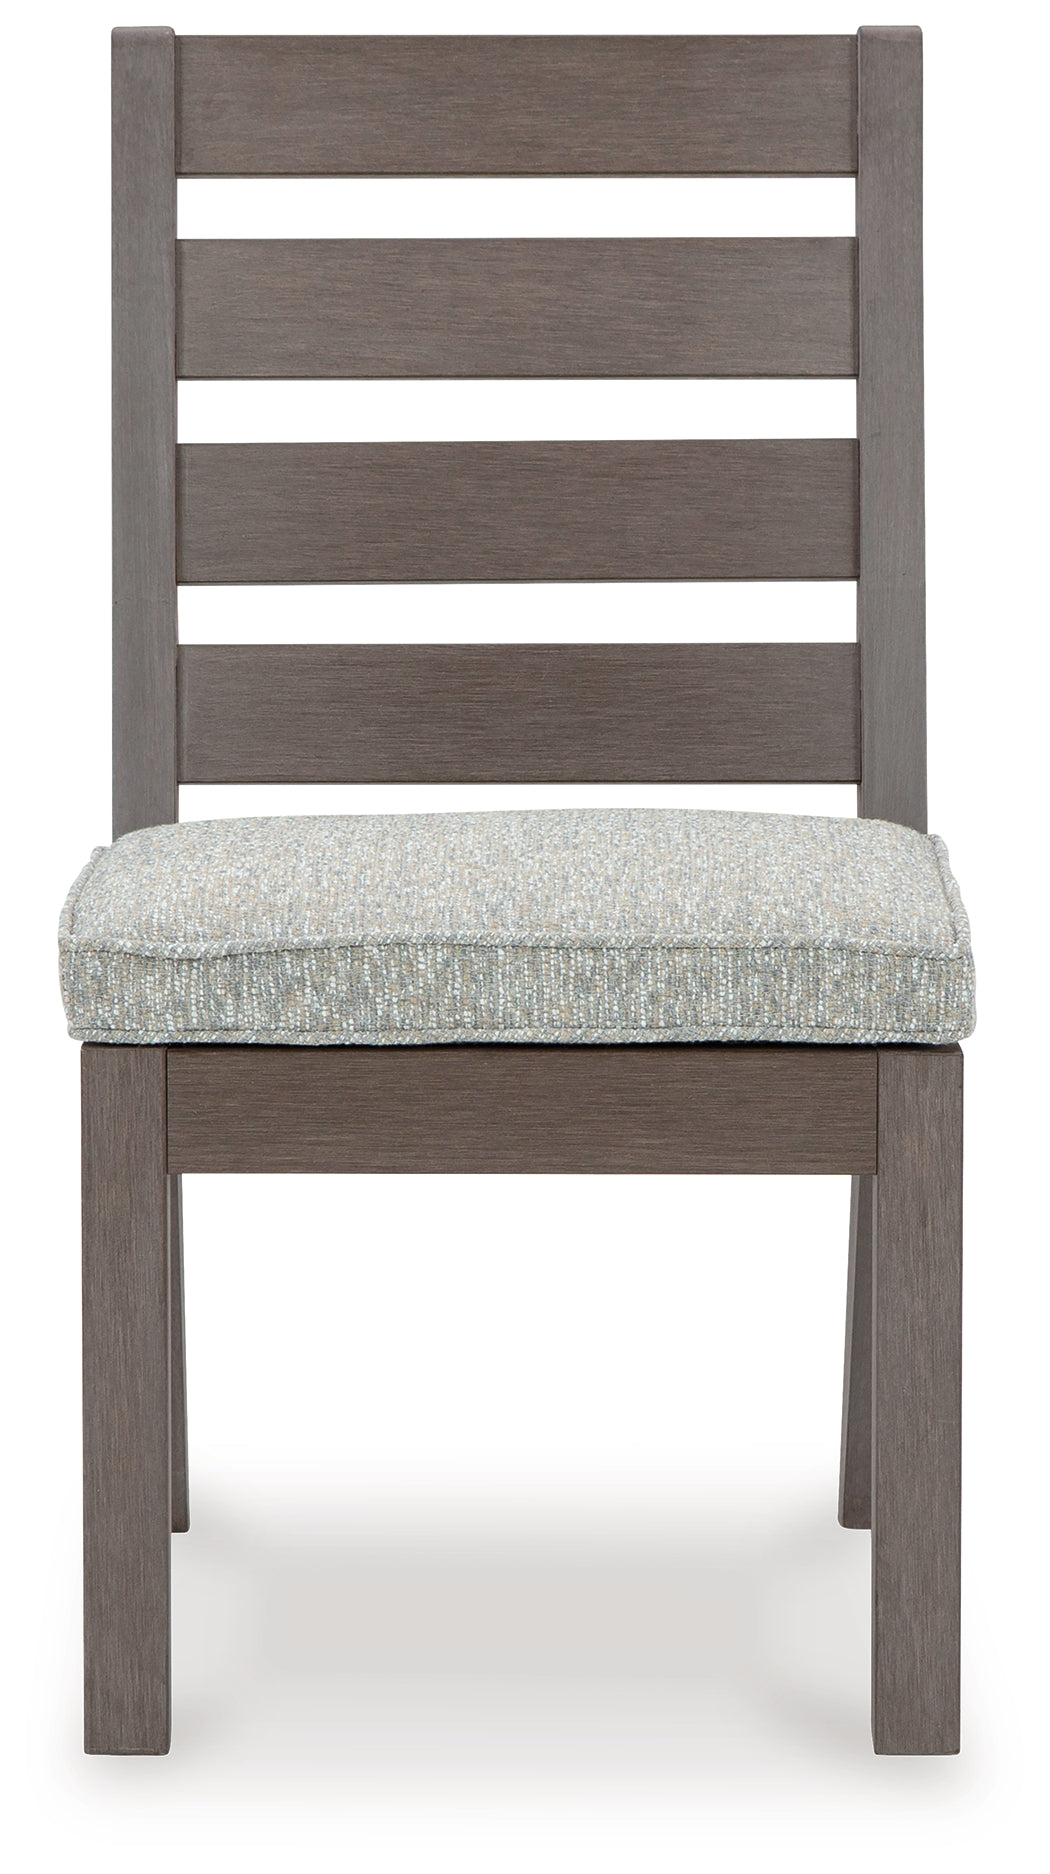 Hillside Barn Gray/Brown Outdoor Dining Chair (Set of 2) - P564-601 - Luna Furniture